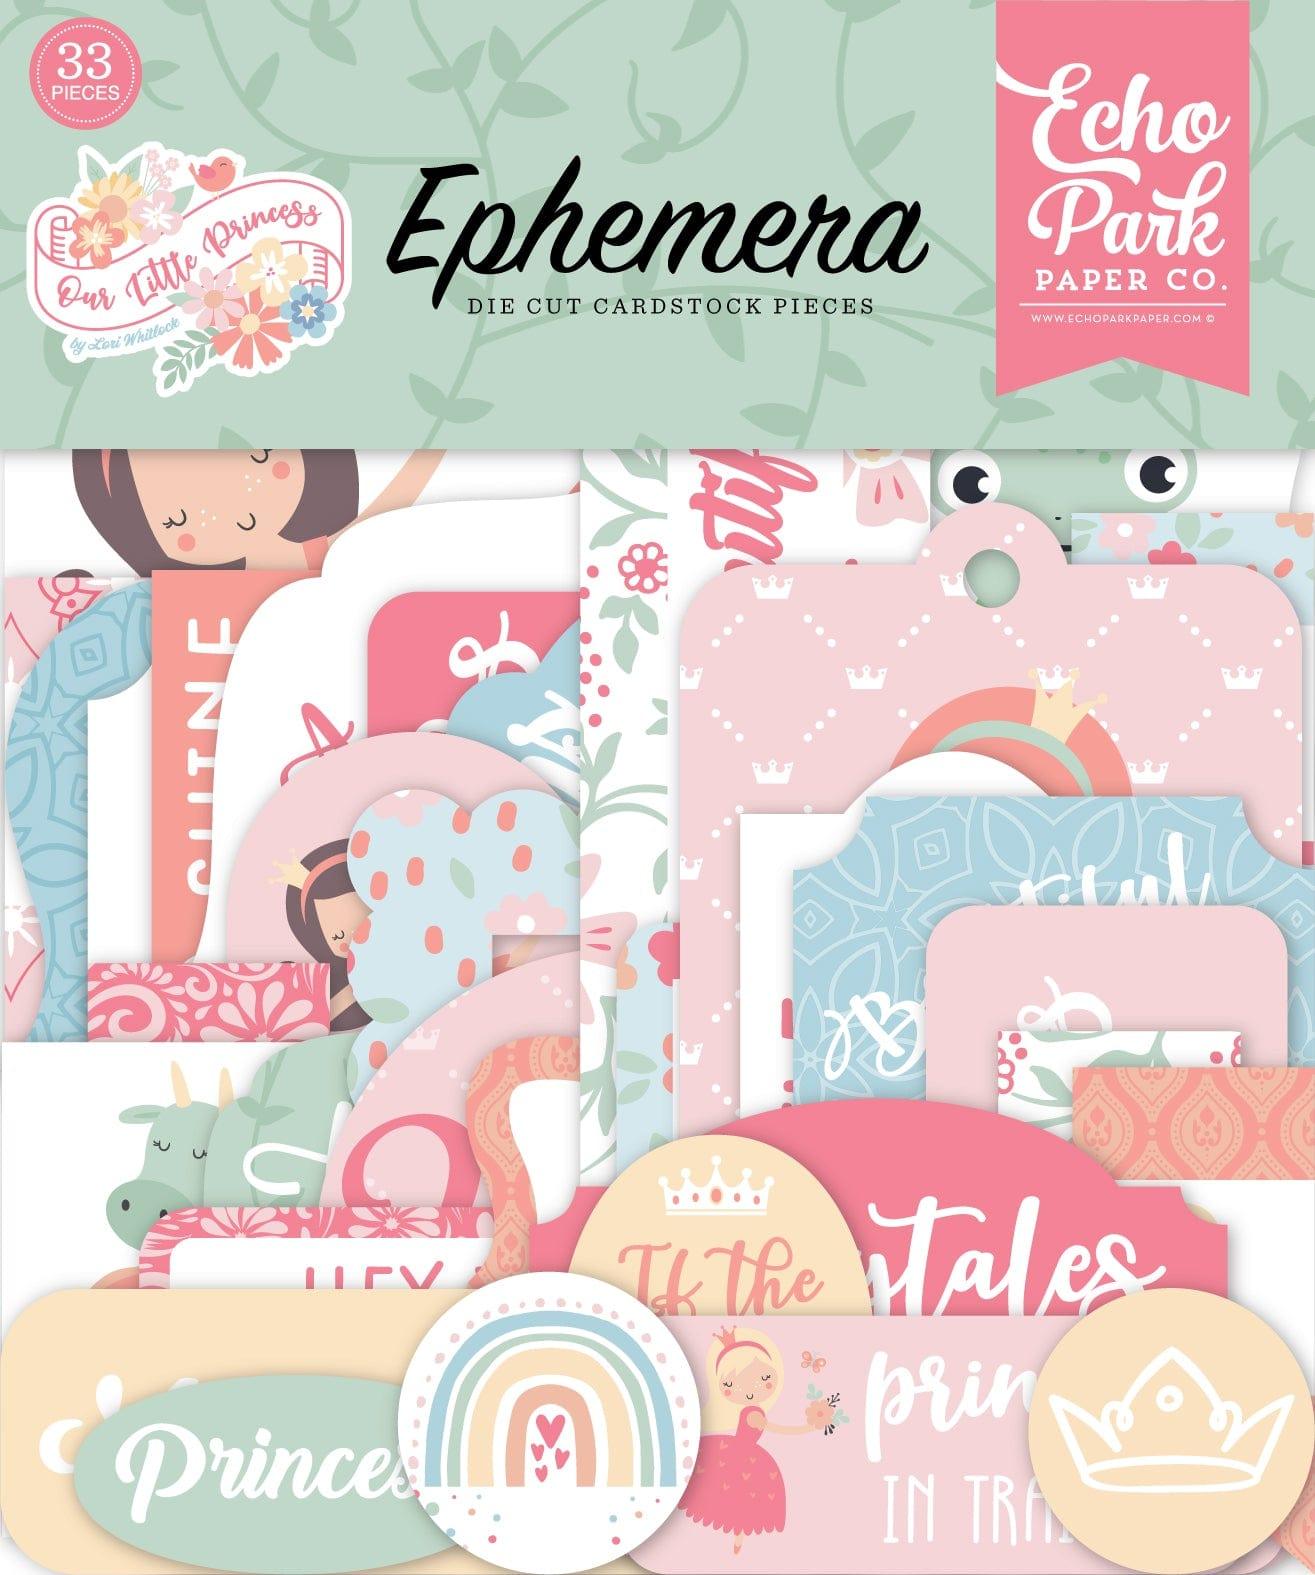 Our Little Princess Collection 5 x 5 Scrapbook Ephemera Die Cuts by Echo Park Paper - Scrapbook Supply Companies